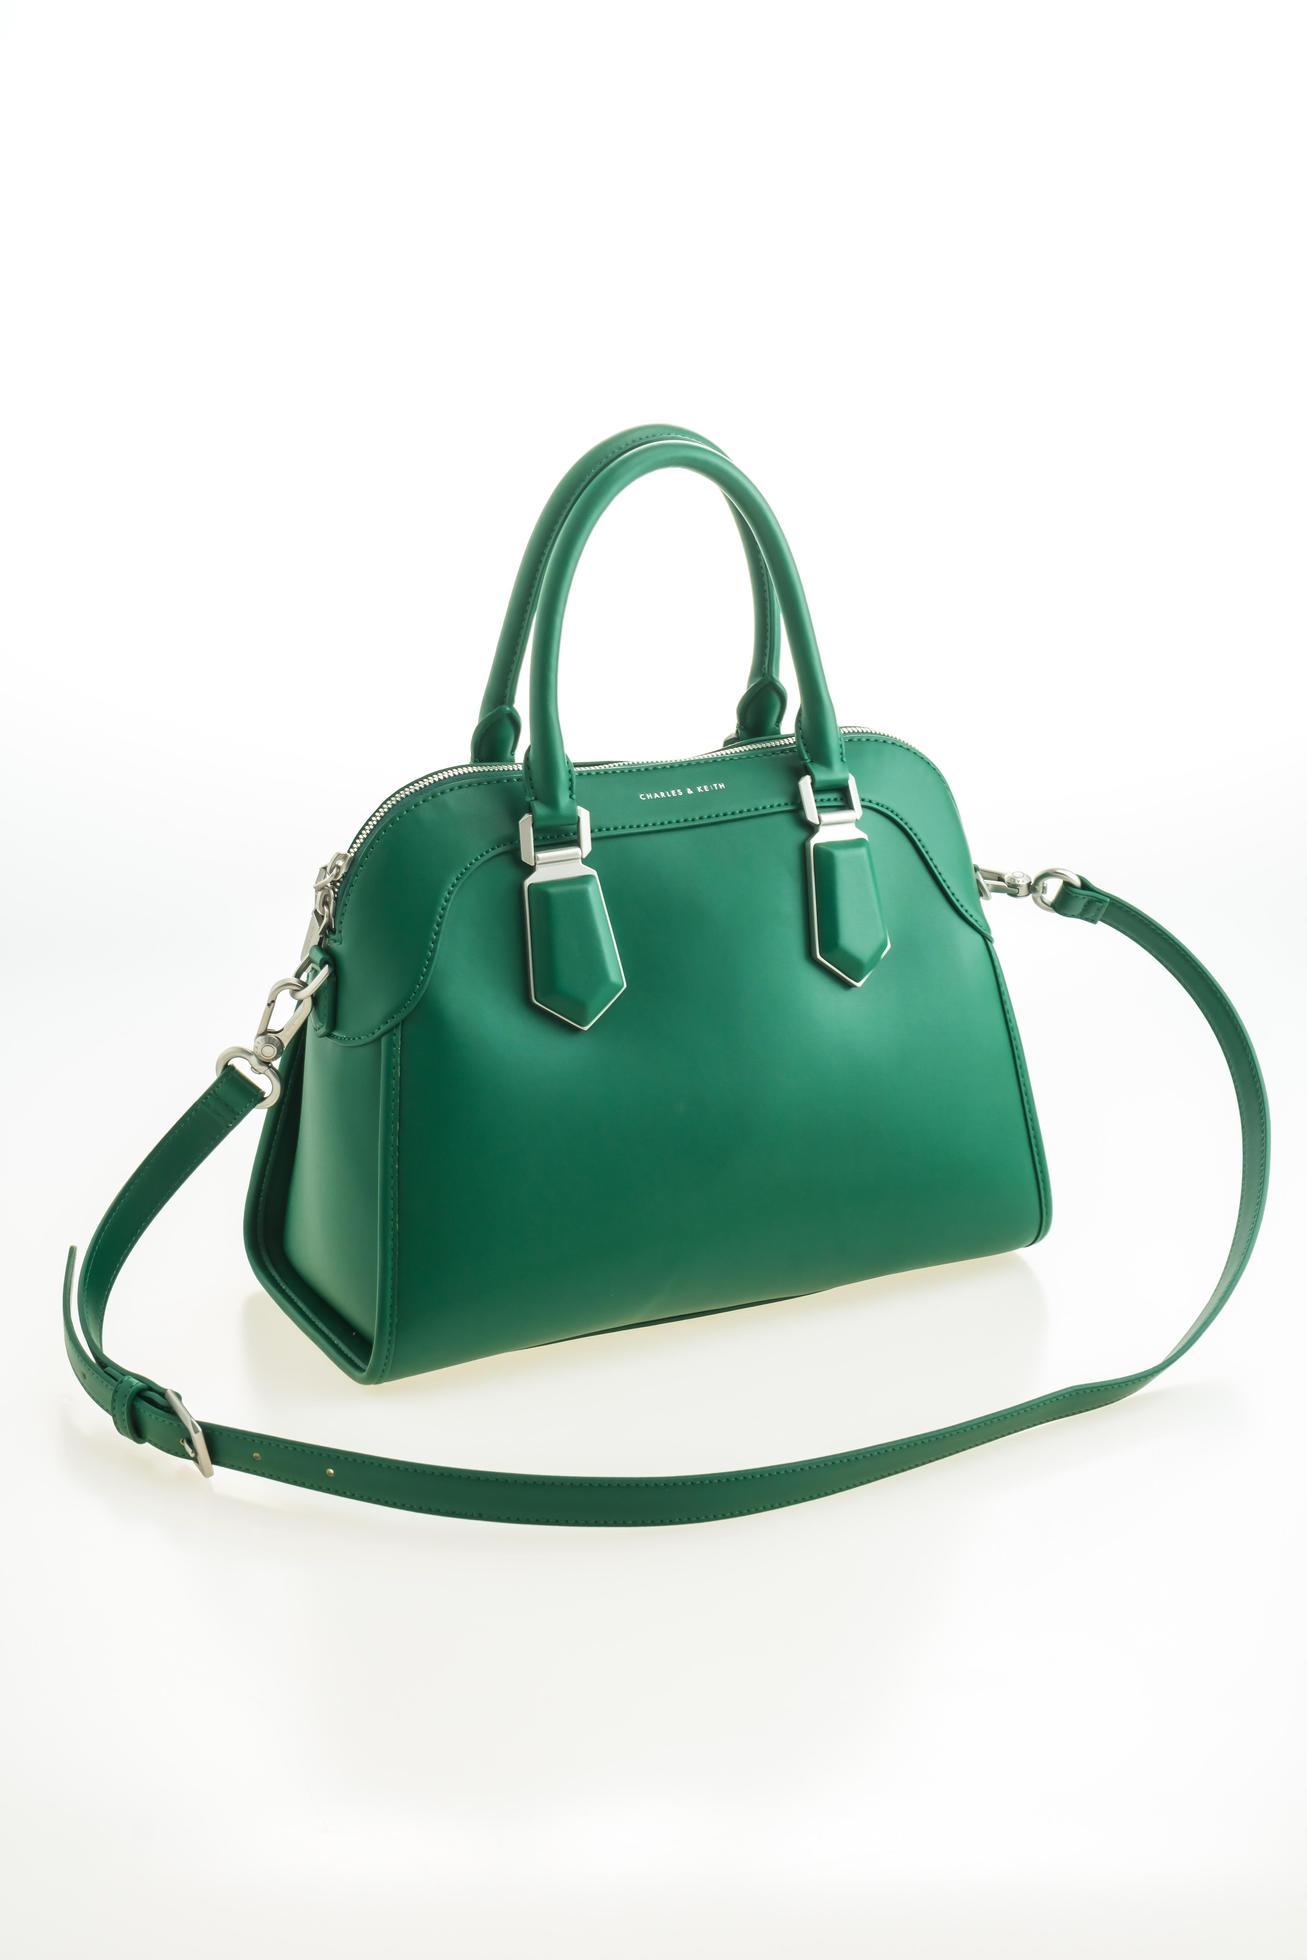 Beautiful elegance and luxury fashion green handbag 2234811 Stock Photo ...